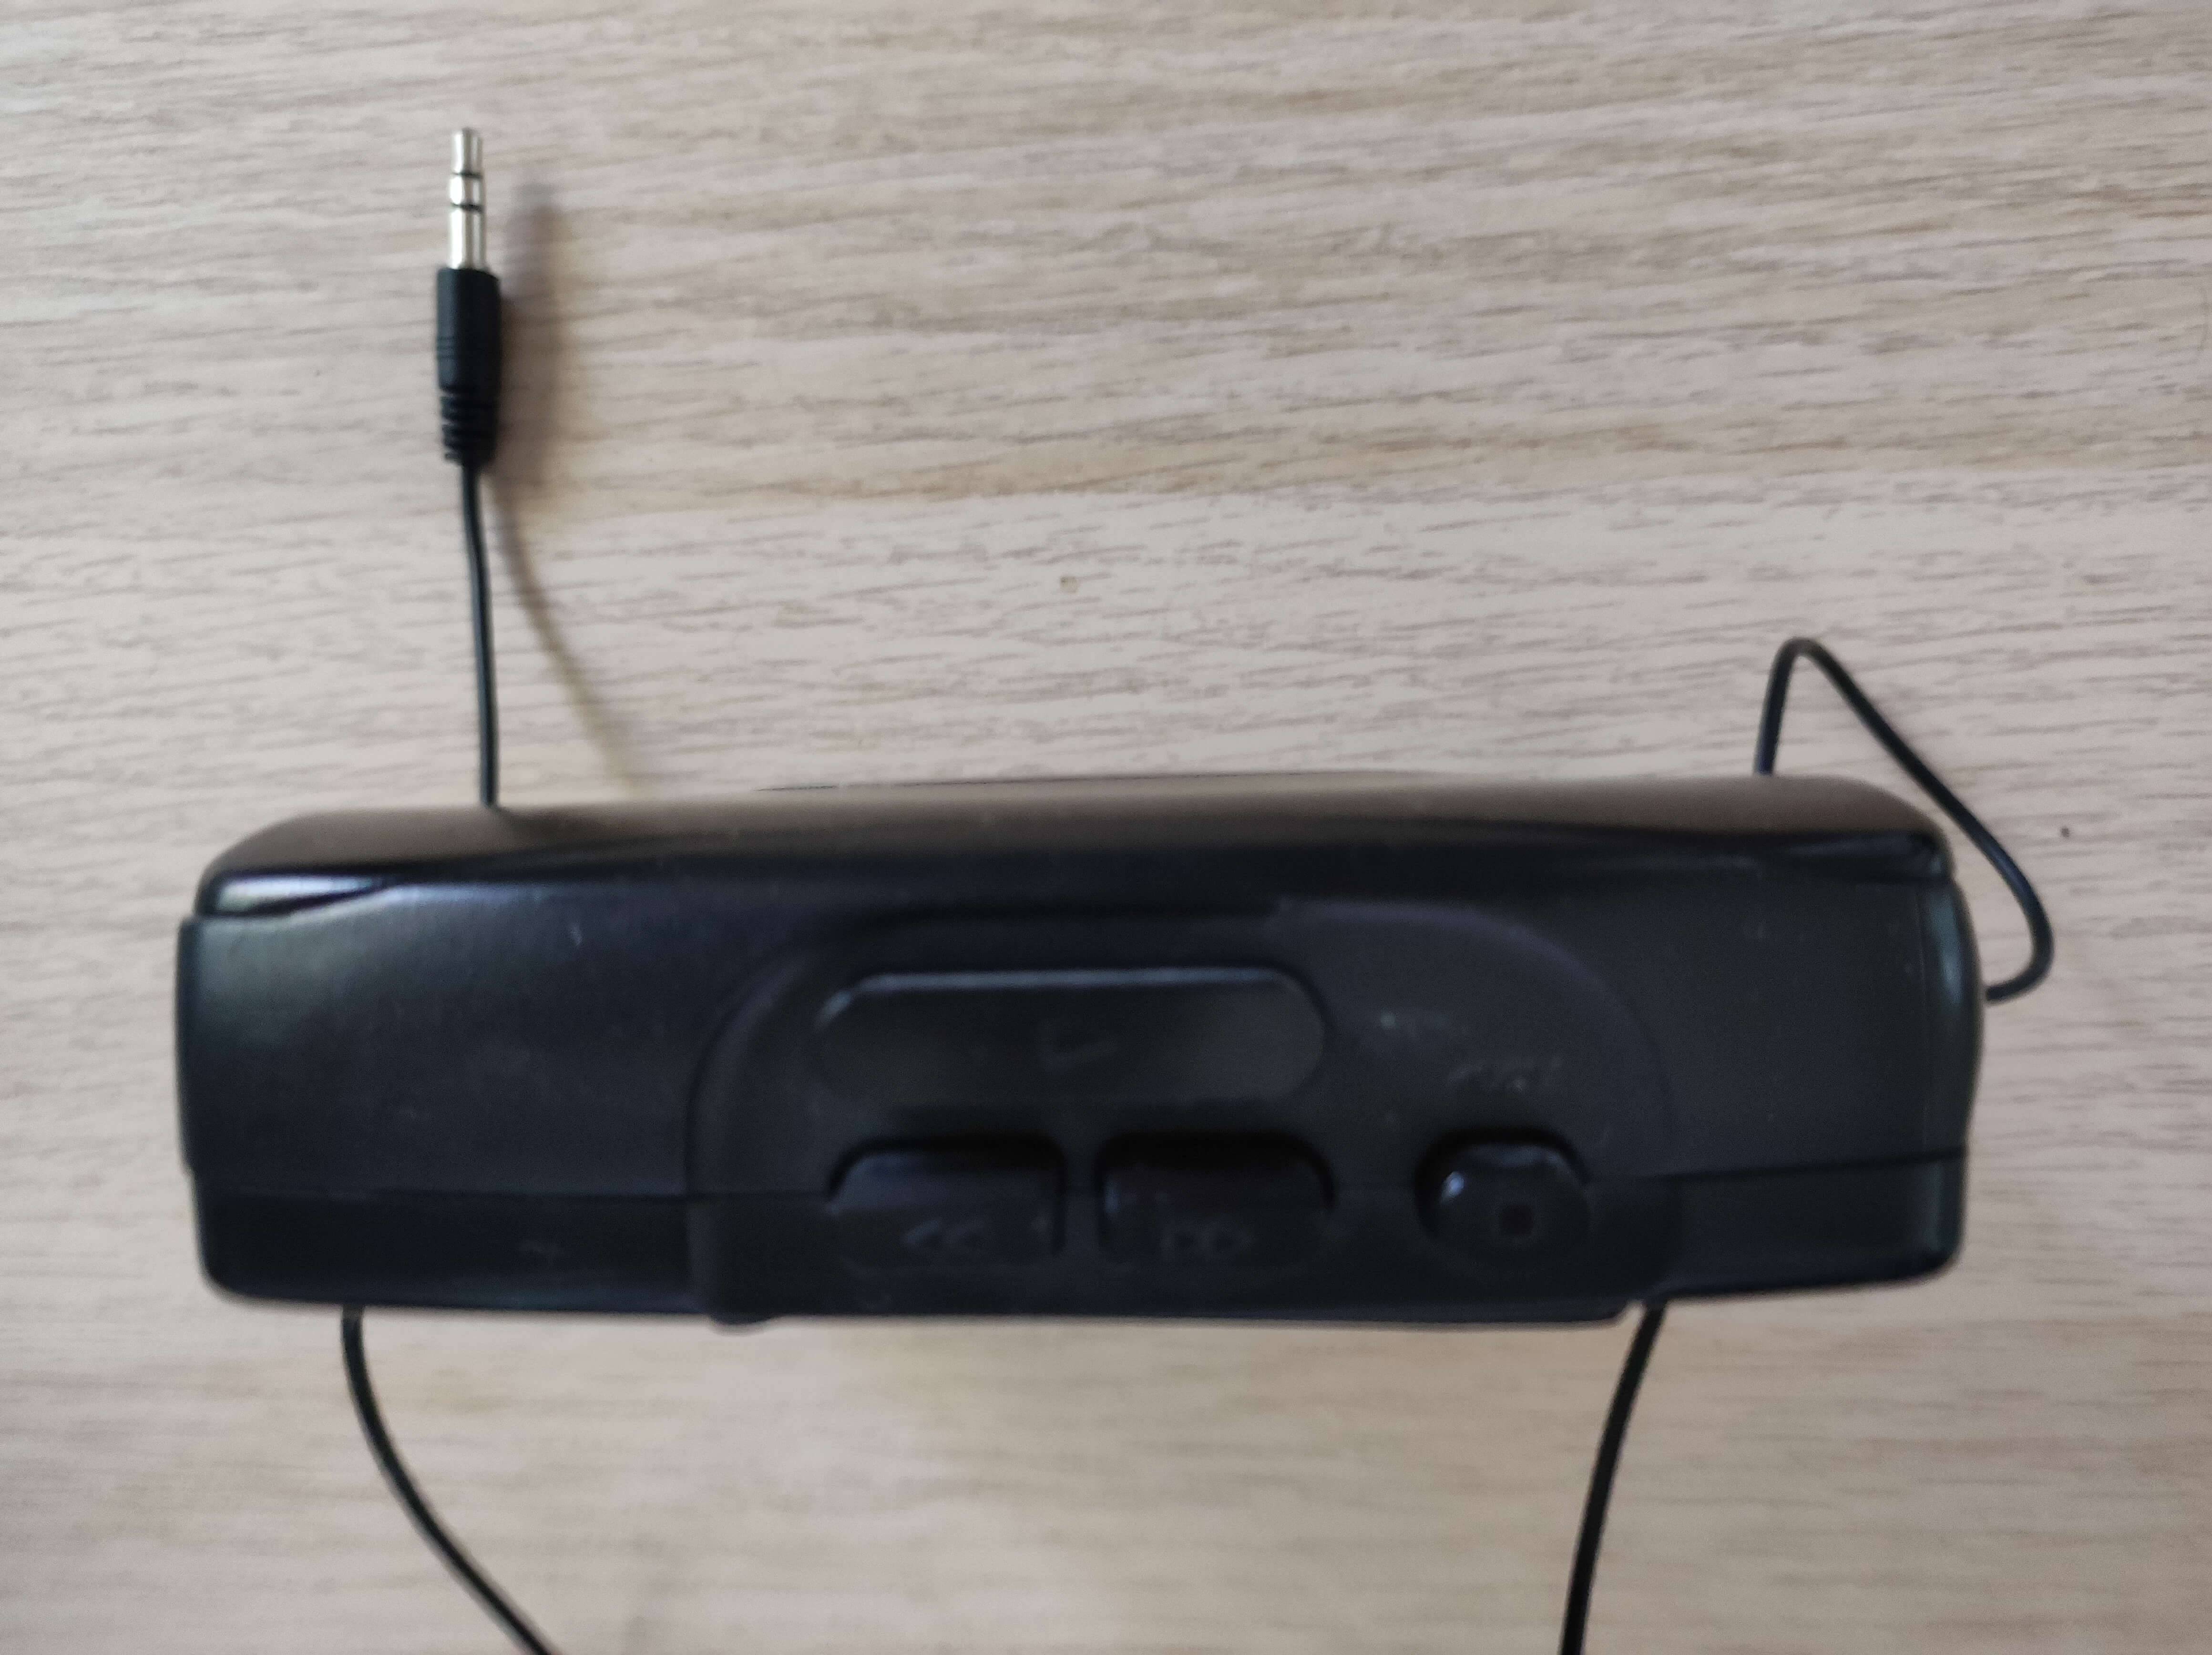 Sony Walkman + 3,5mm Klinkekabel - zum überspielen von Kasetten - d72150e1-2ce2-40c2-b83e-3218c0c9ae65